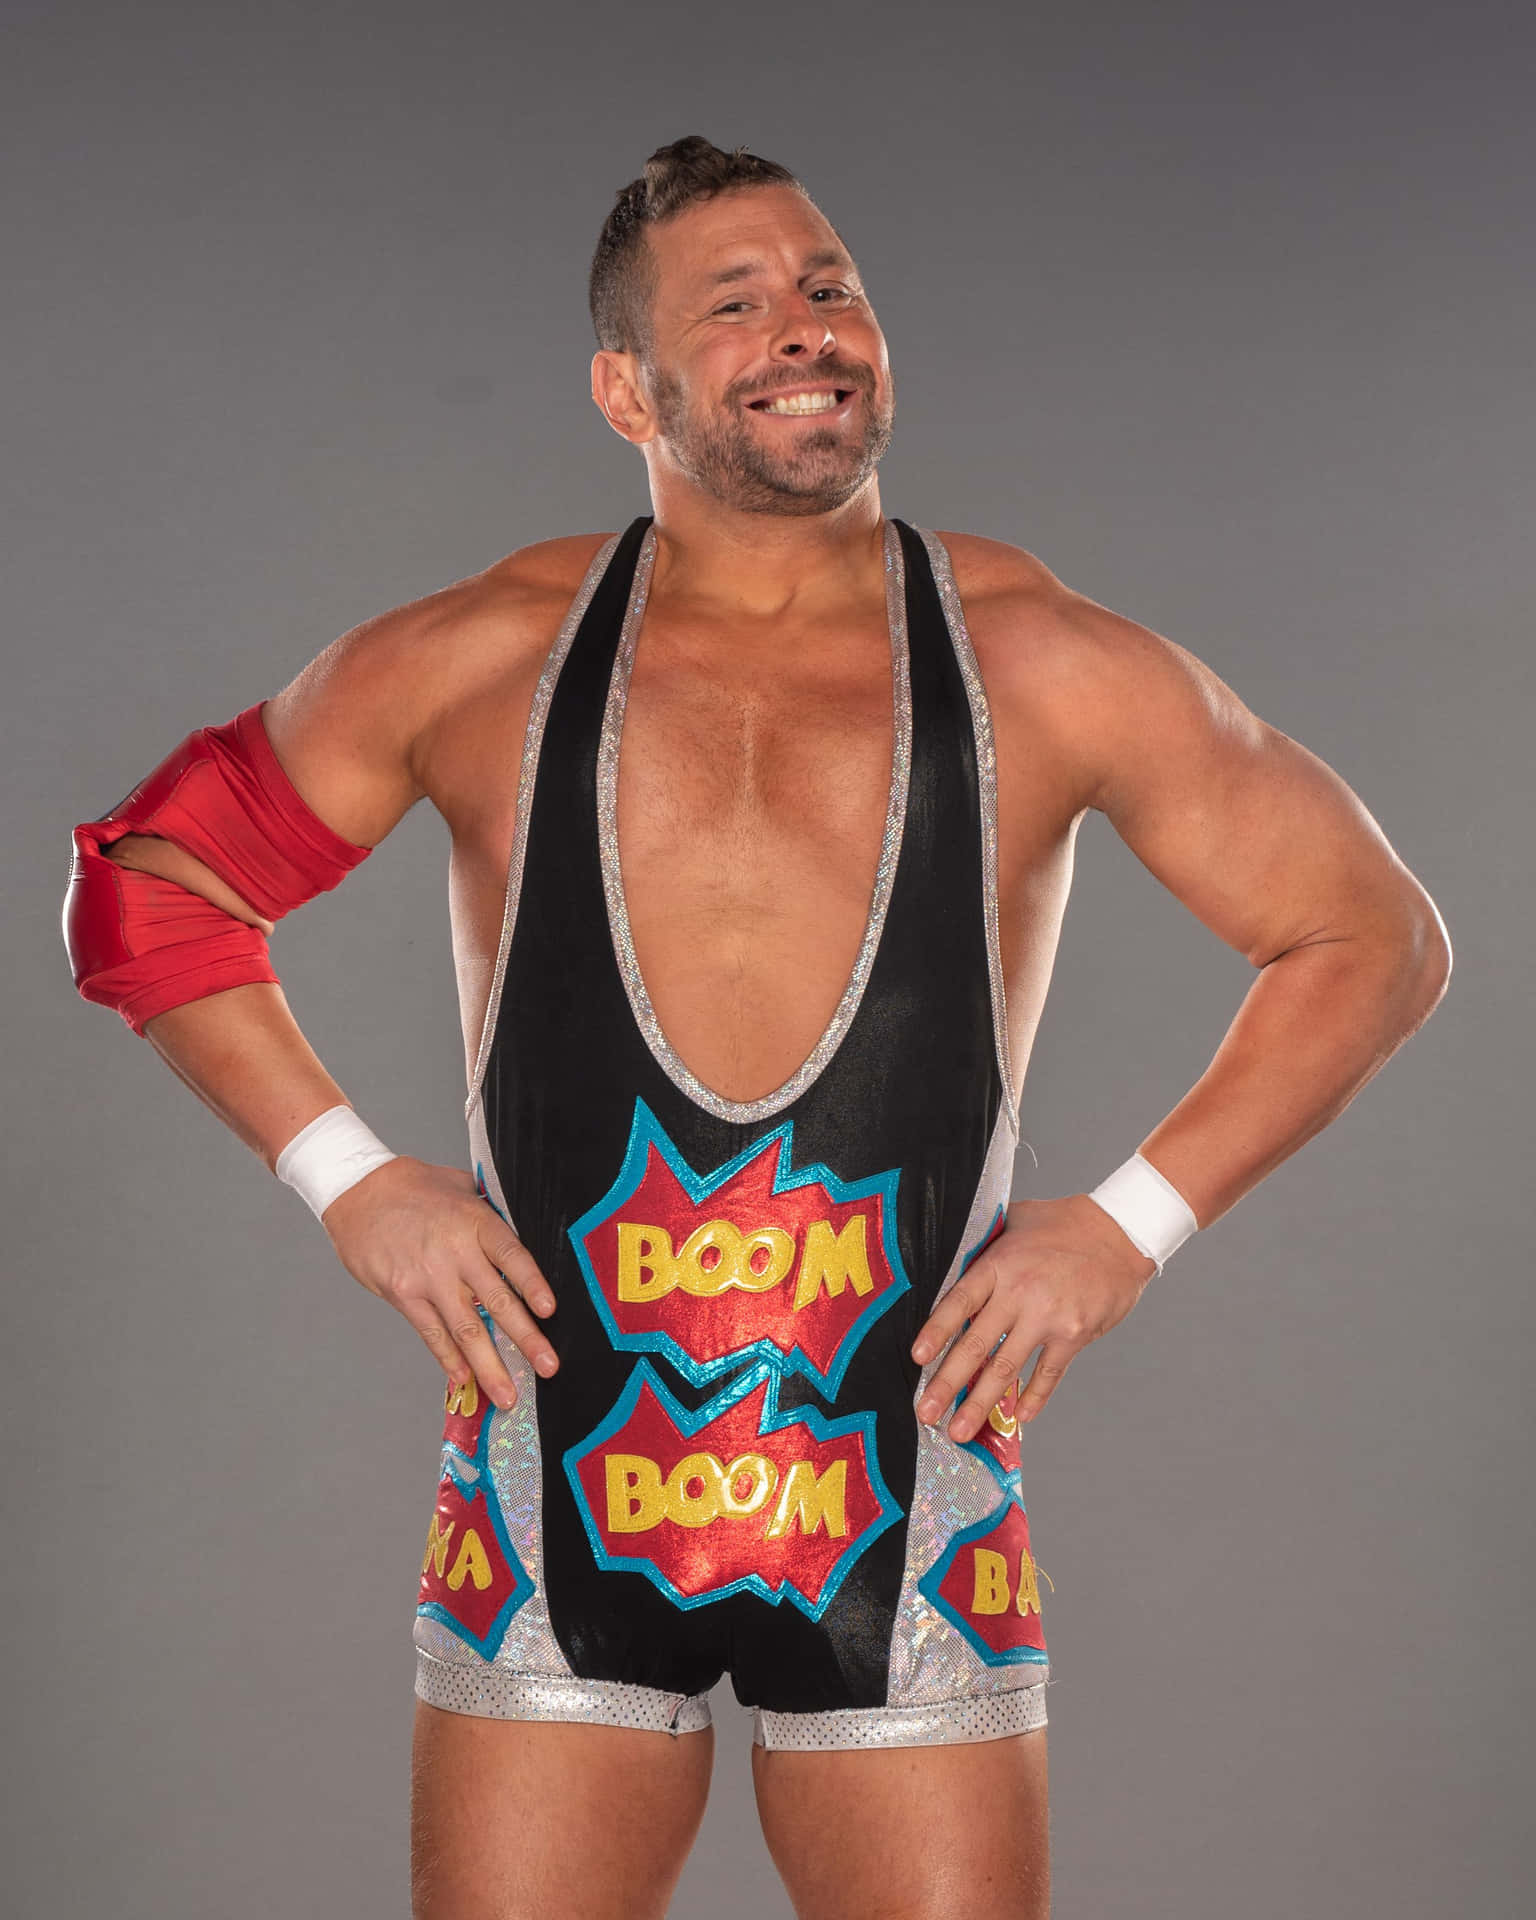 Colt Cabana Aew Professional Wrestler Background